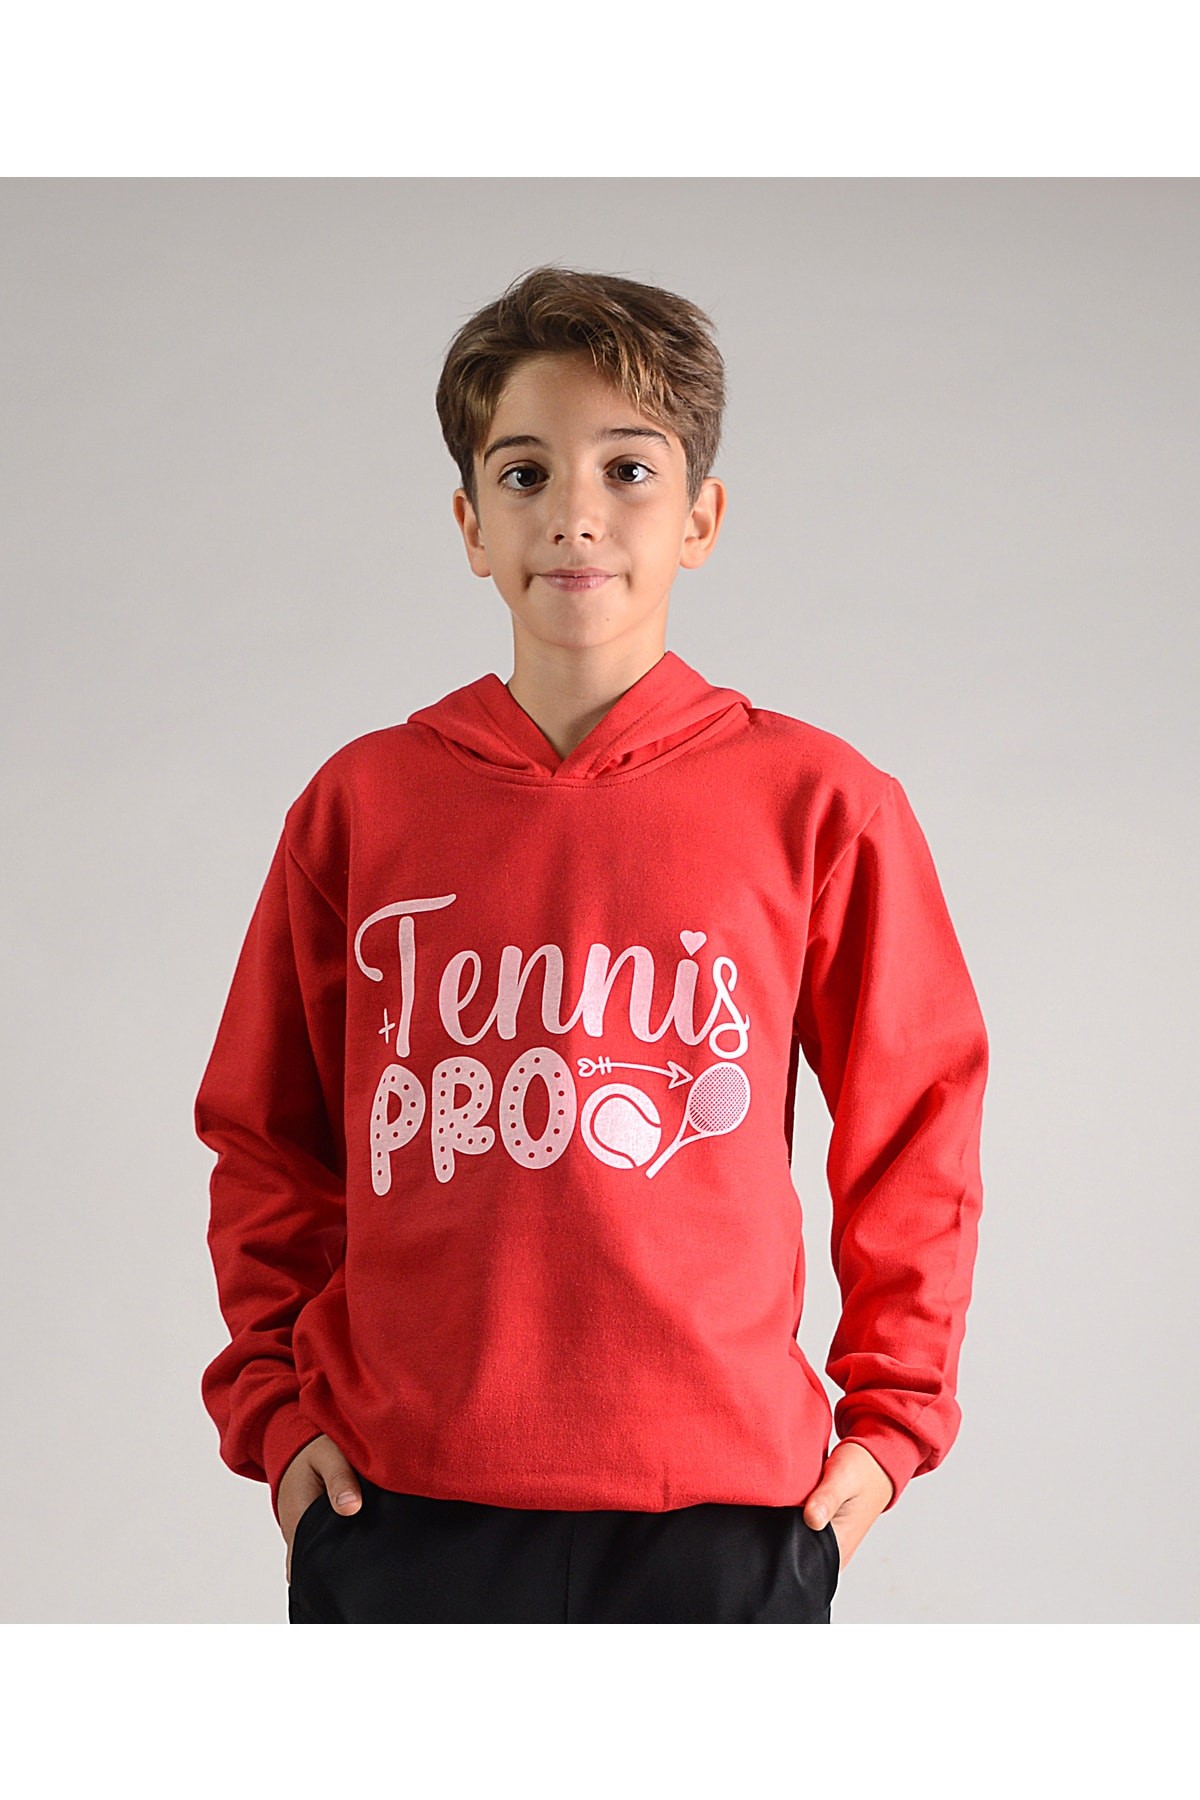 Kids Unisex Cotton Hoodie Tennis Pro Printed Red SSUSW3